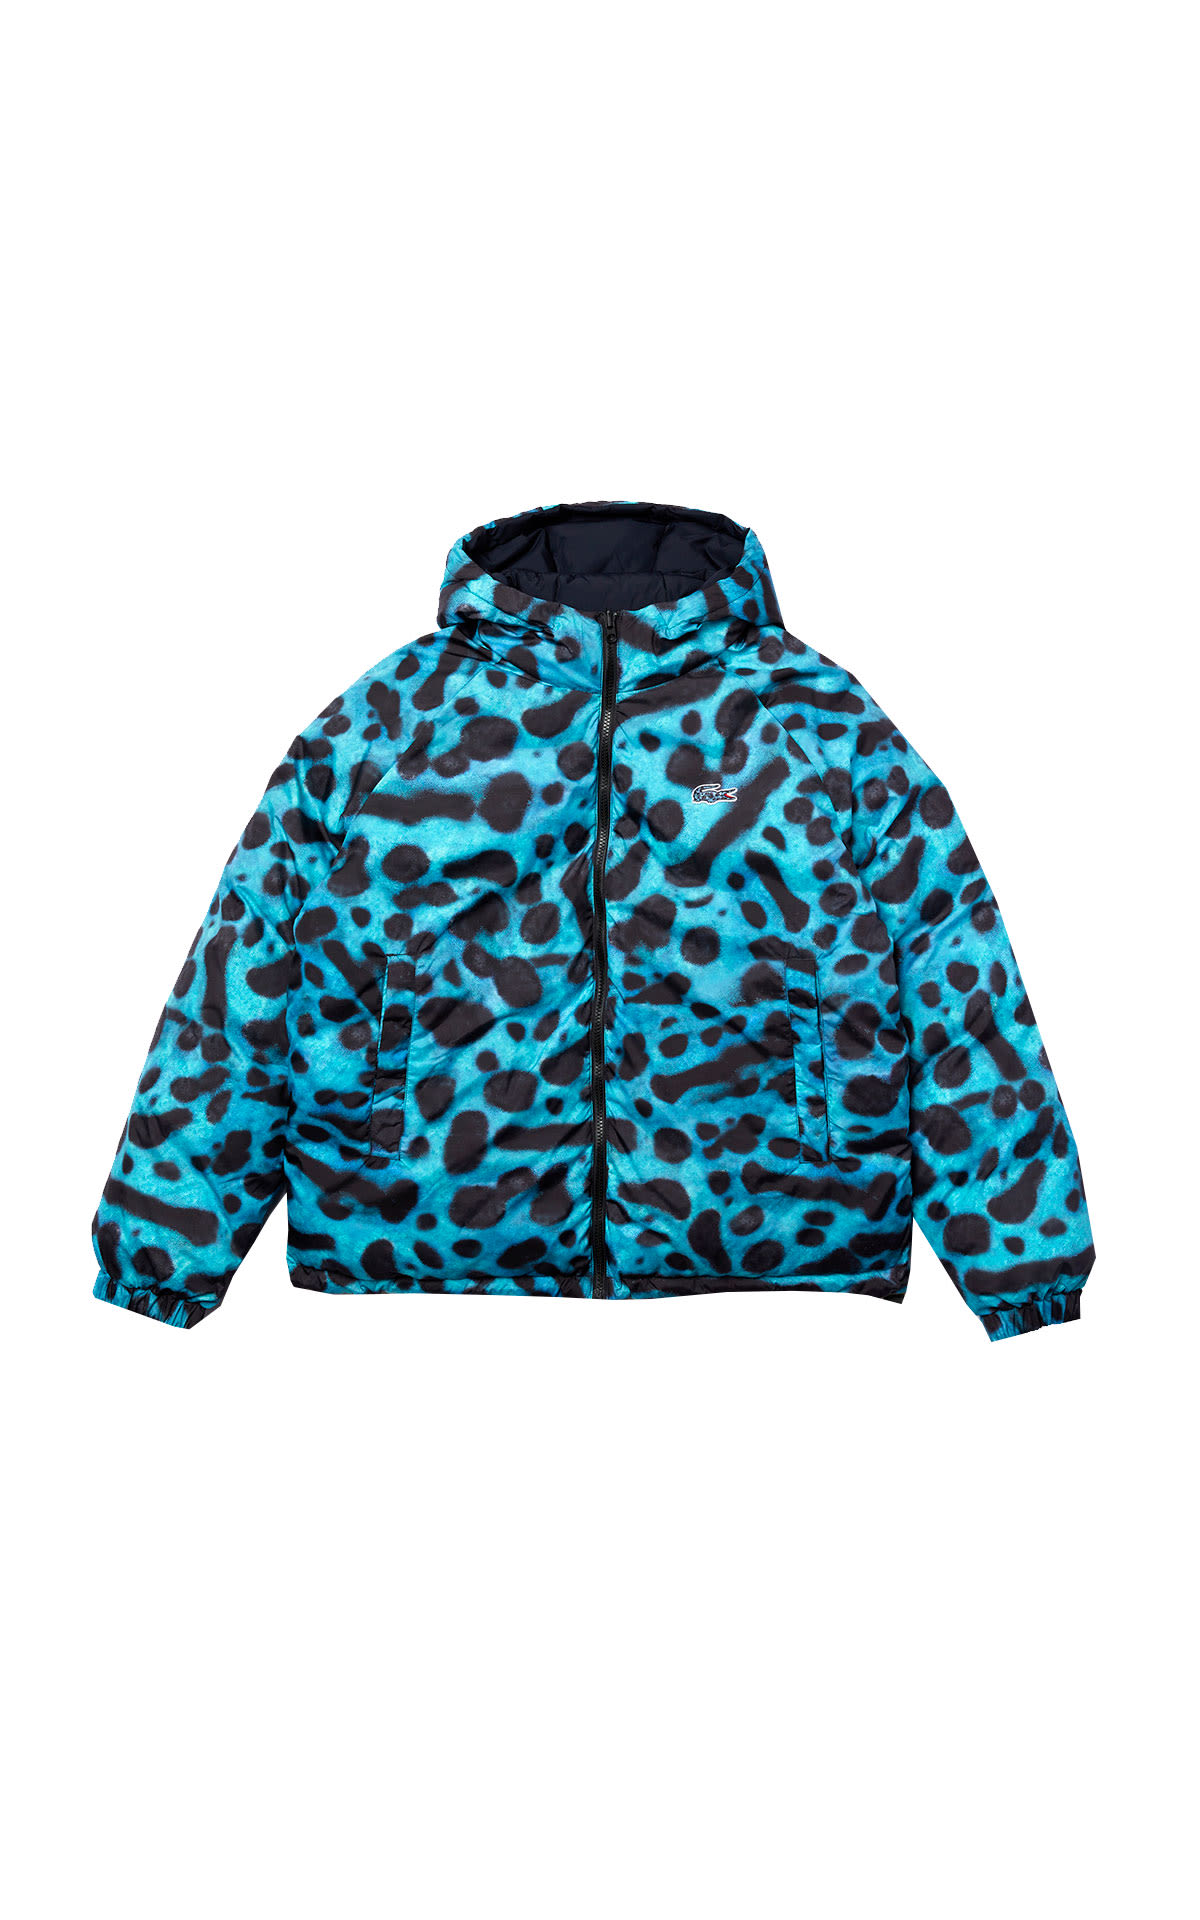 Lacoste leopard print blue anorak